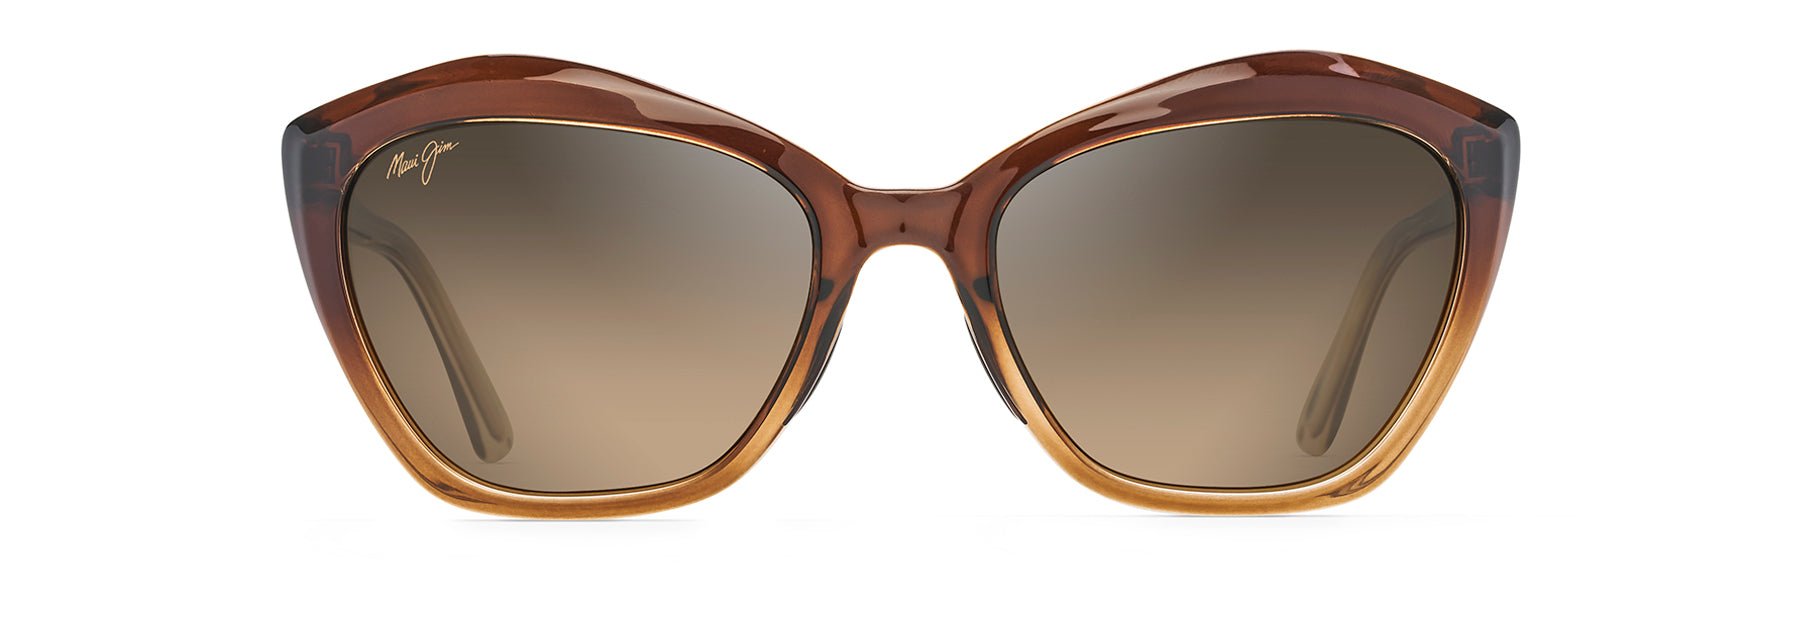 Maui Jim Lotus Sunglasses